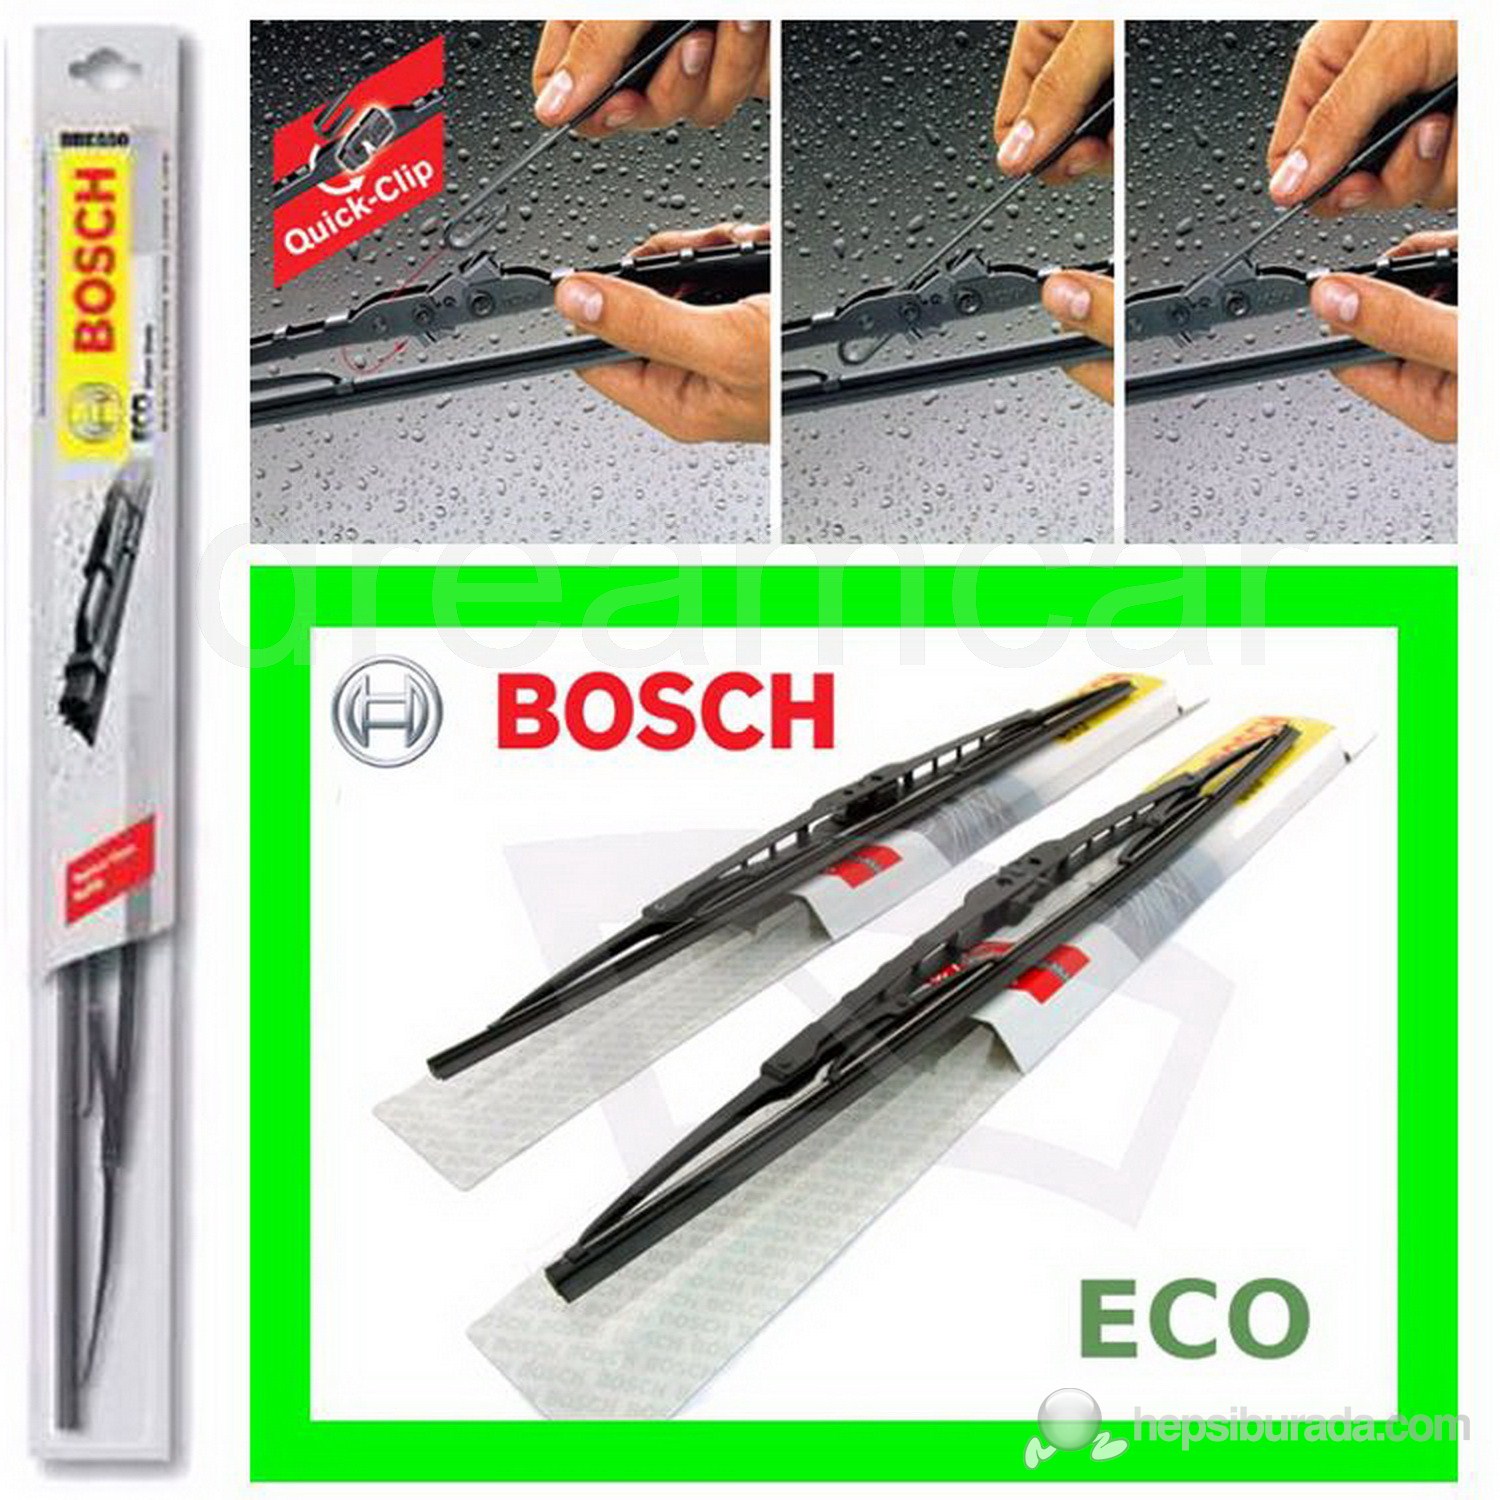 Bosch Eco Universal Quick-Clip Telli Grafitili Silecek 48 Cm. 1 Adet 3397004669